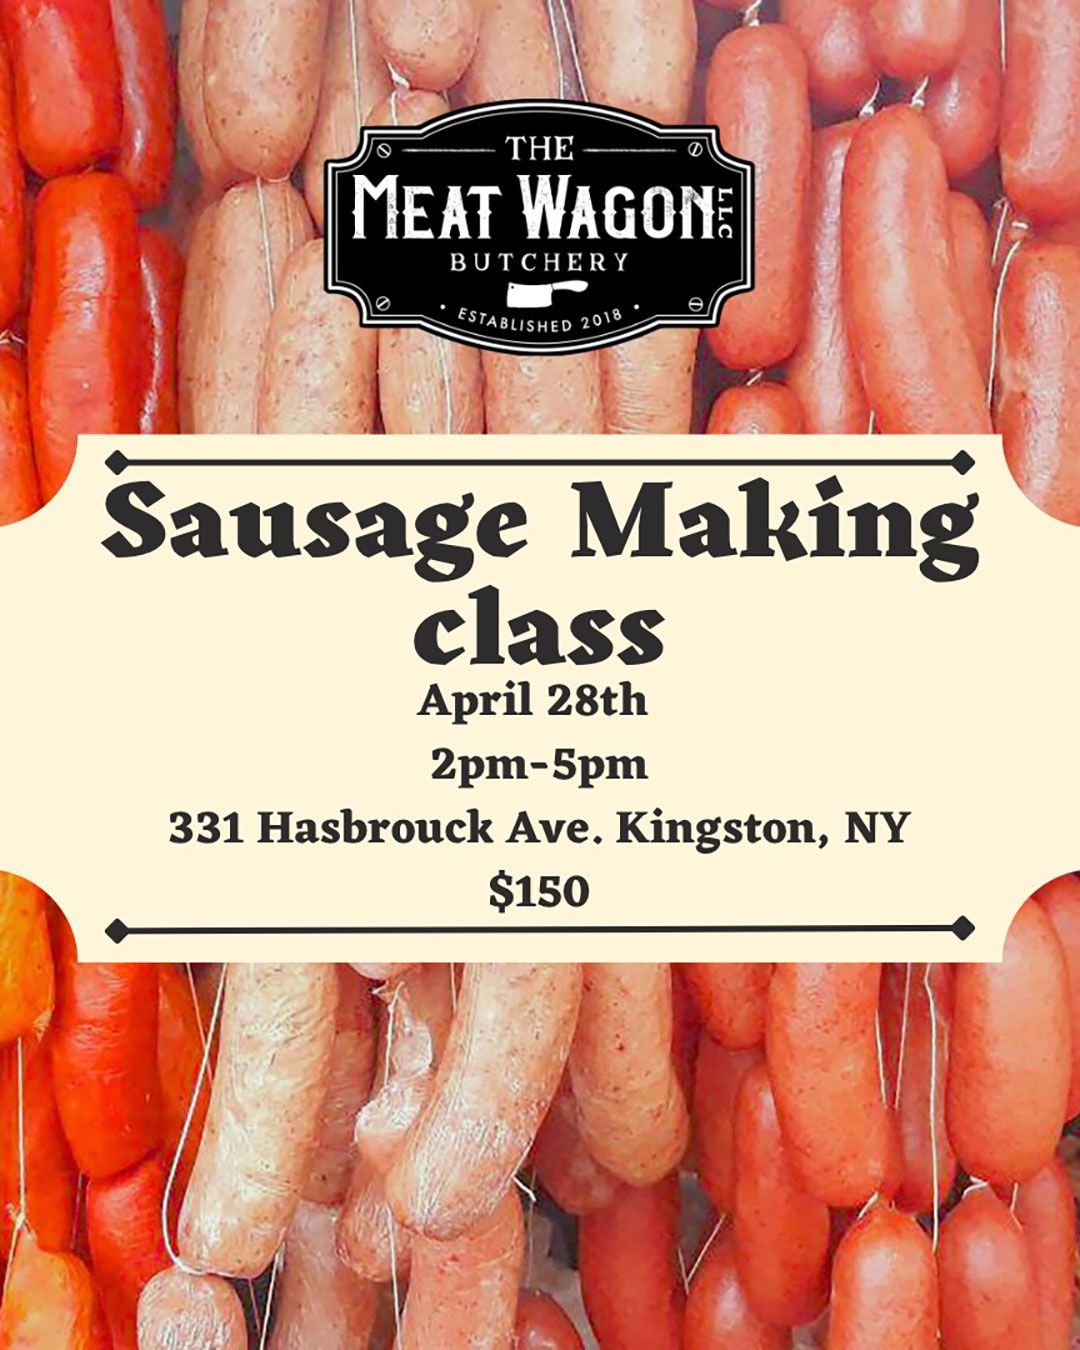 Sausage making class